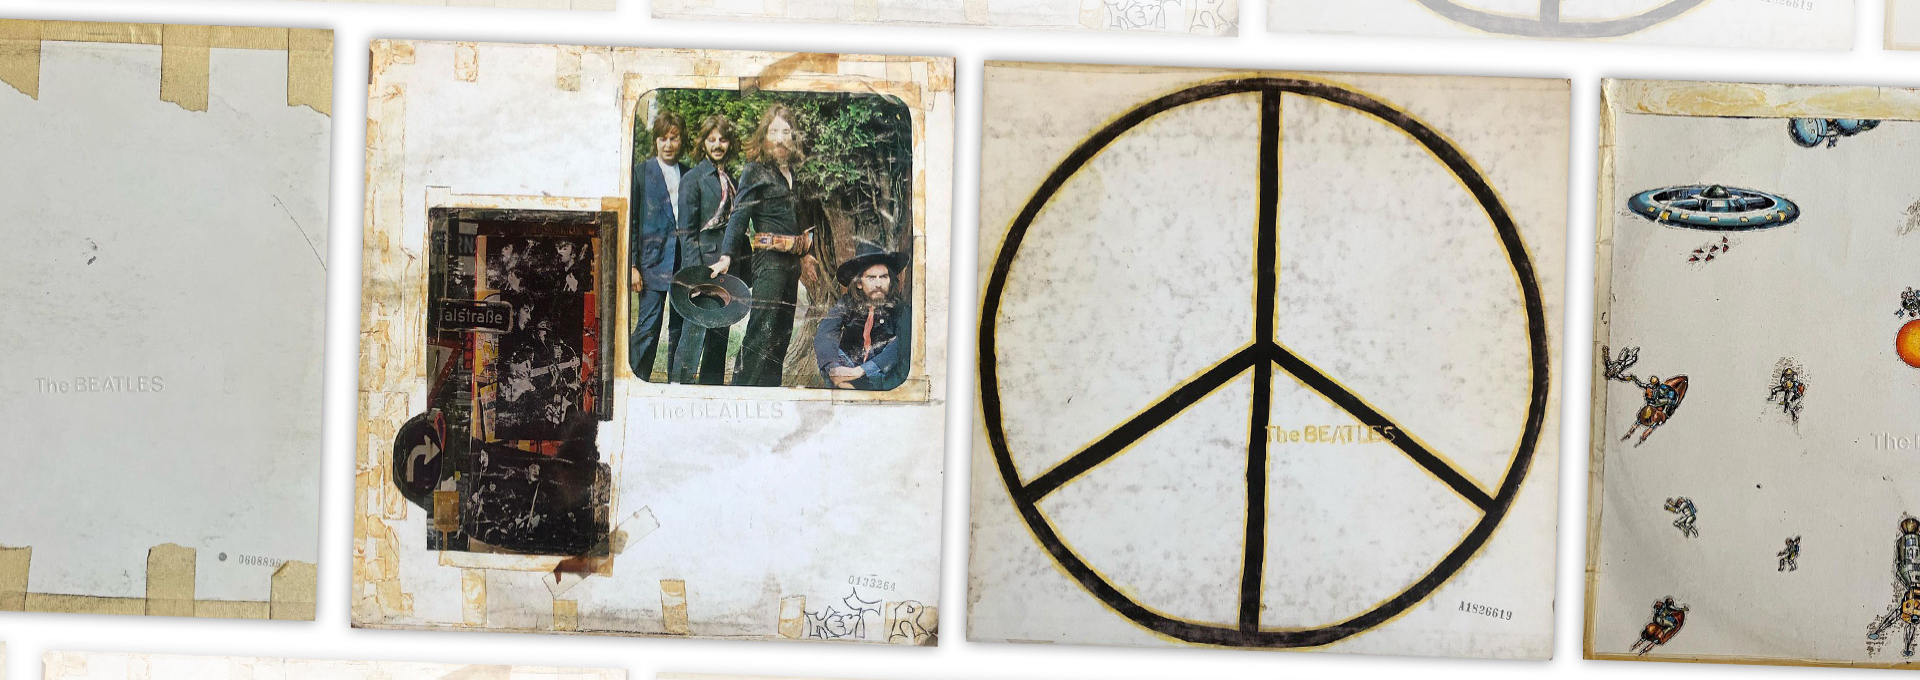 The Beatles White Album artwork